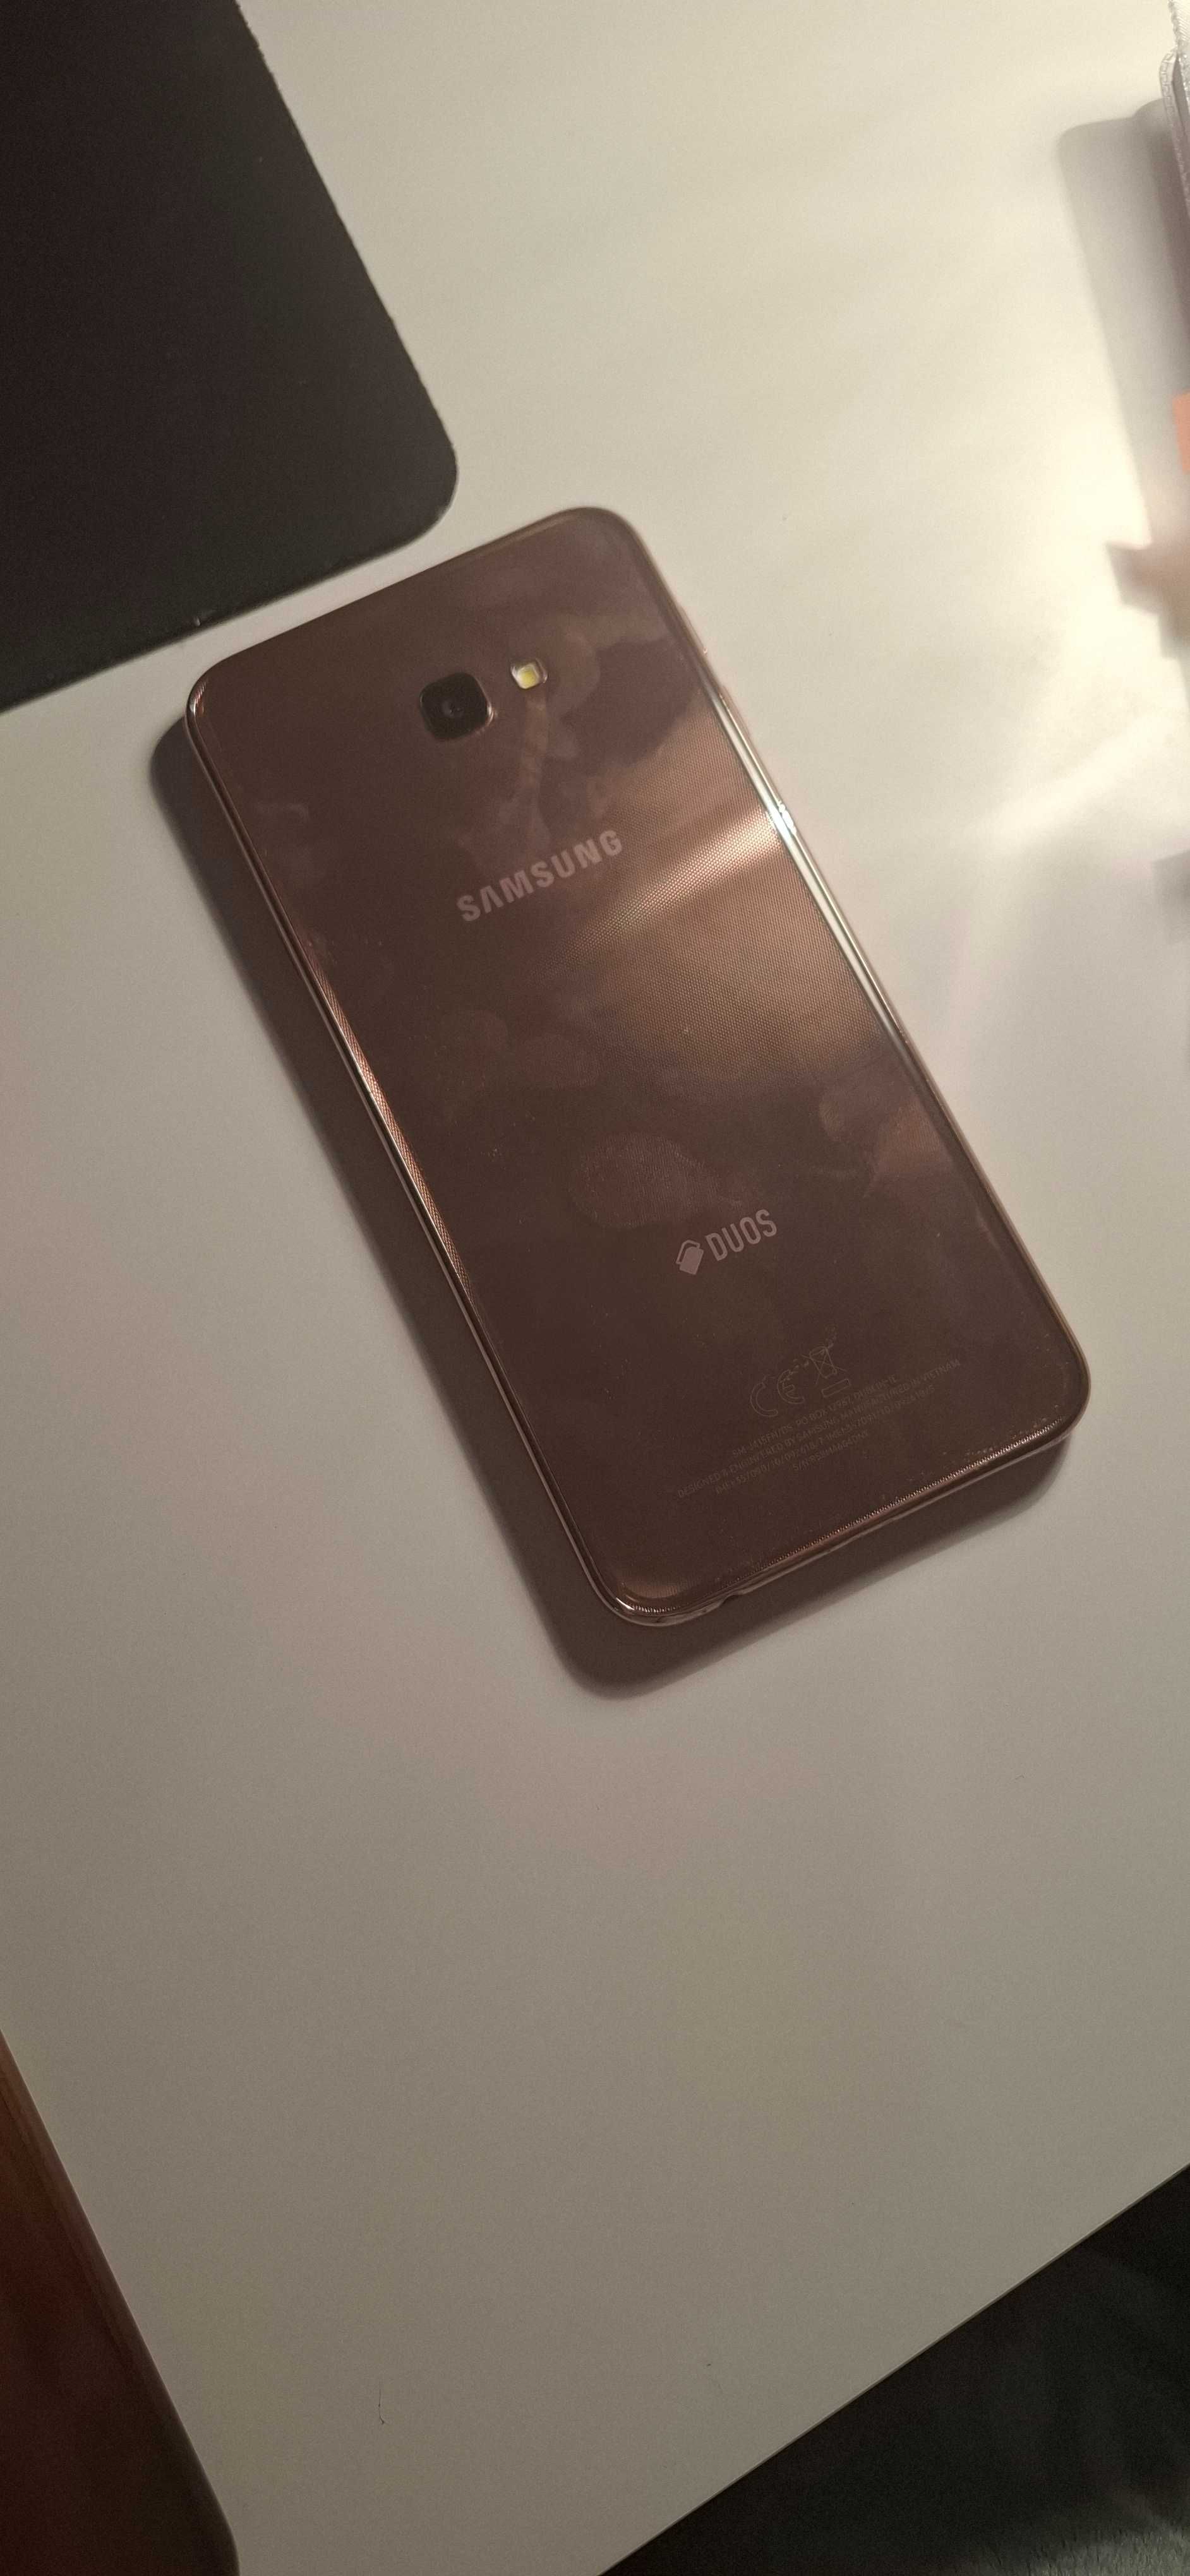 Vand telefon Samsung Galaxy J4 Plus (2018) Gold